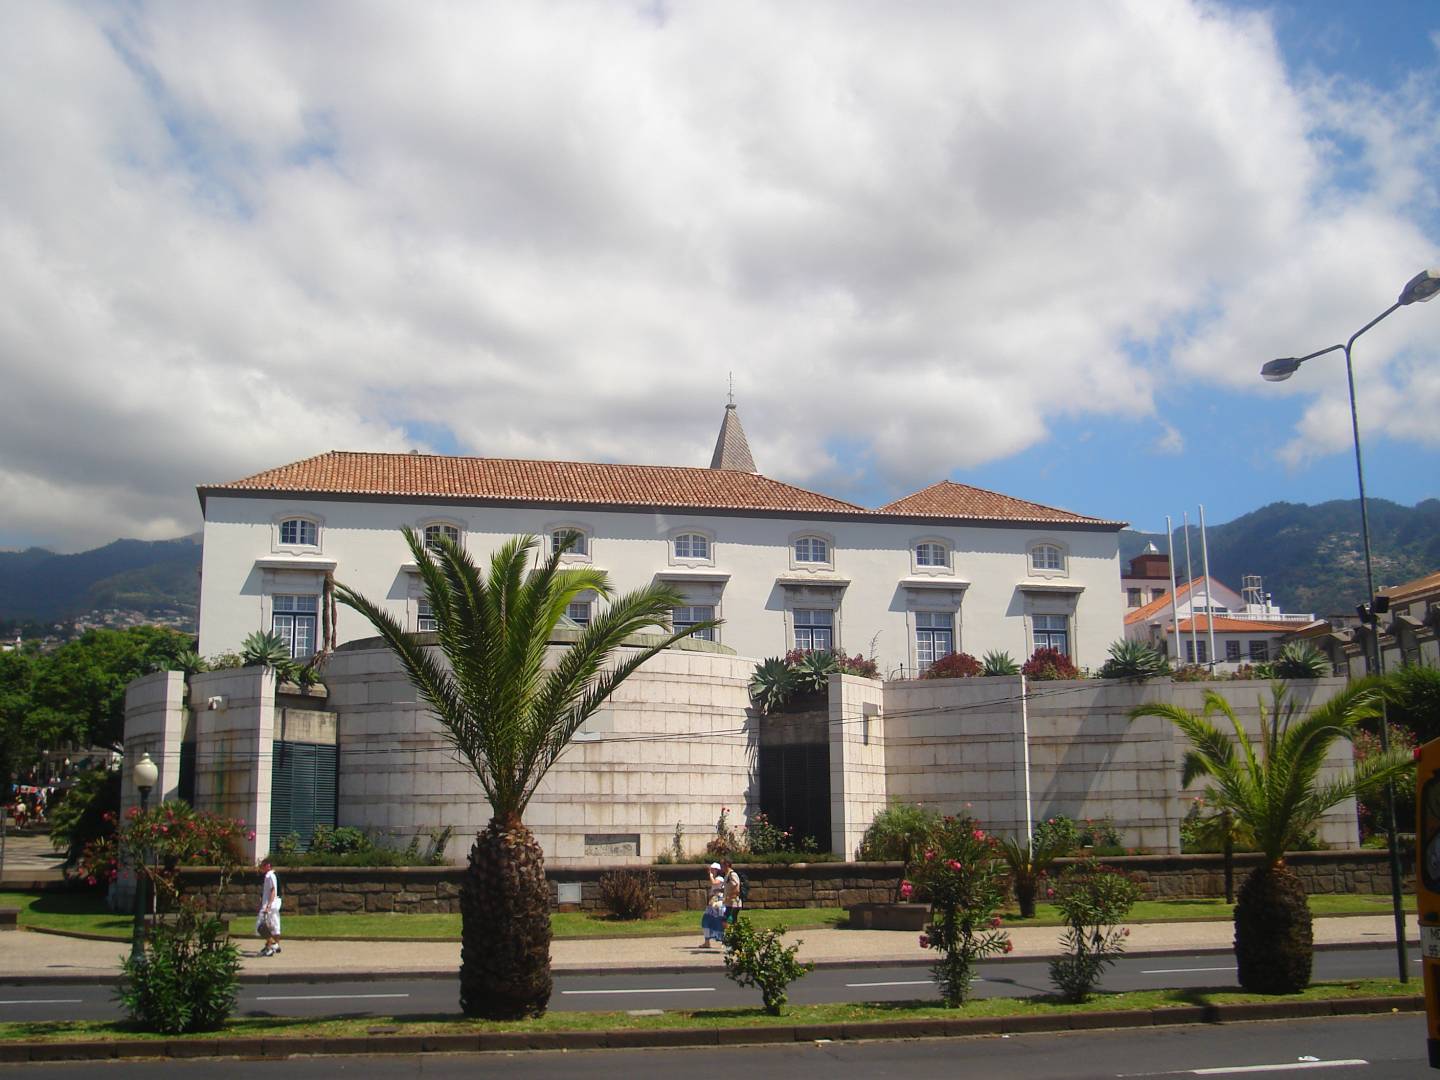 Sede da Assembleia Legislativa da Ilha da Madeira em Portugal